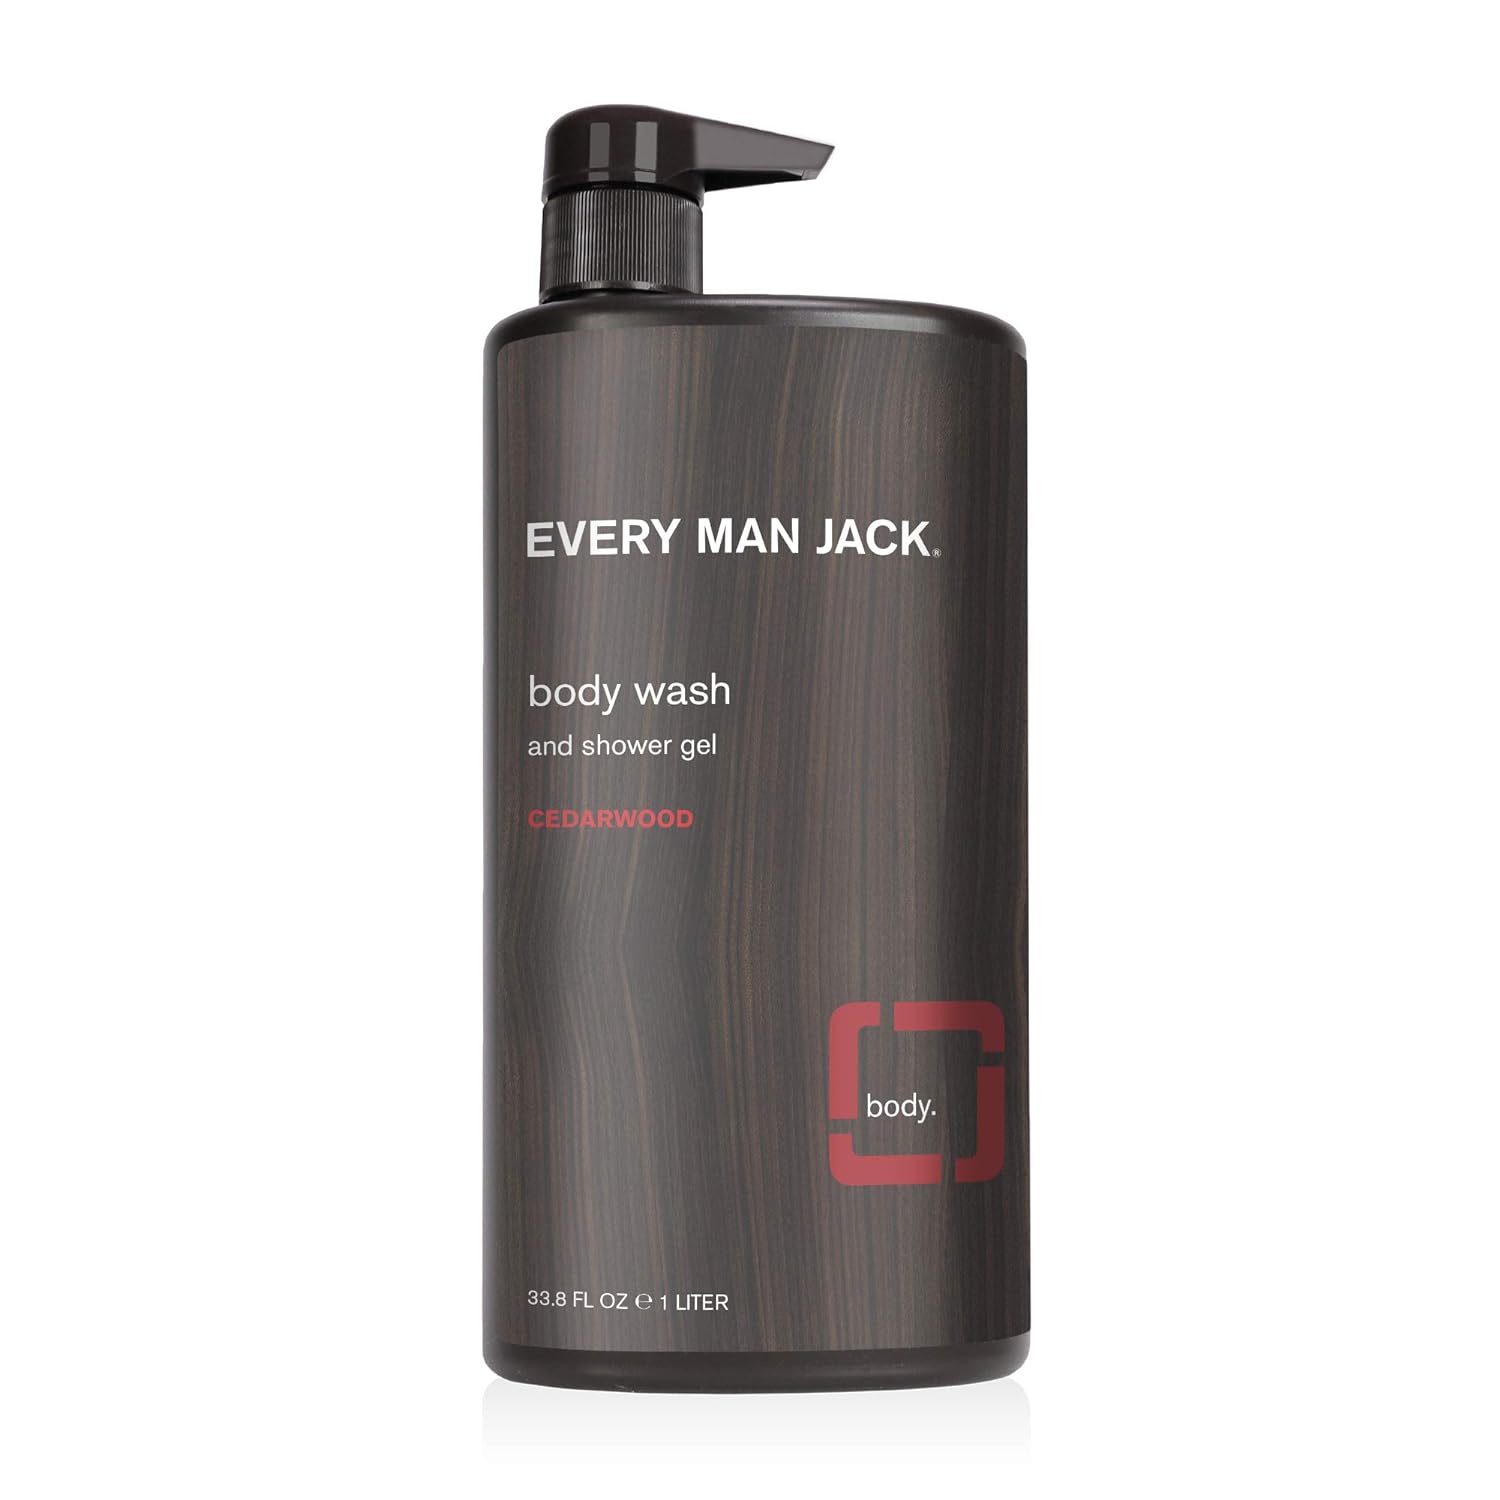 Every Man Jack Body Wash, Cedarwood 33.8-